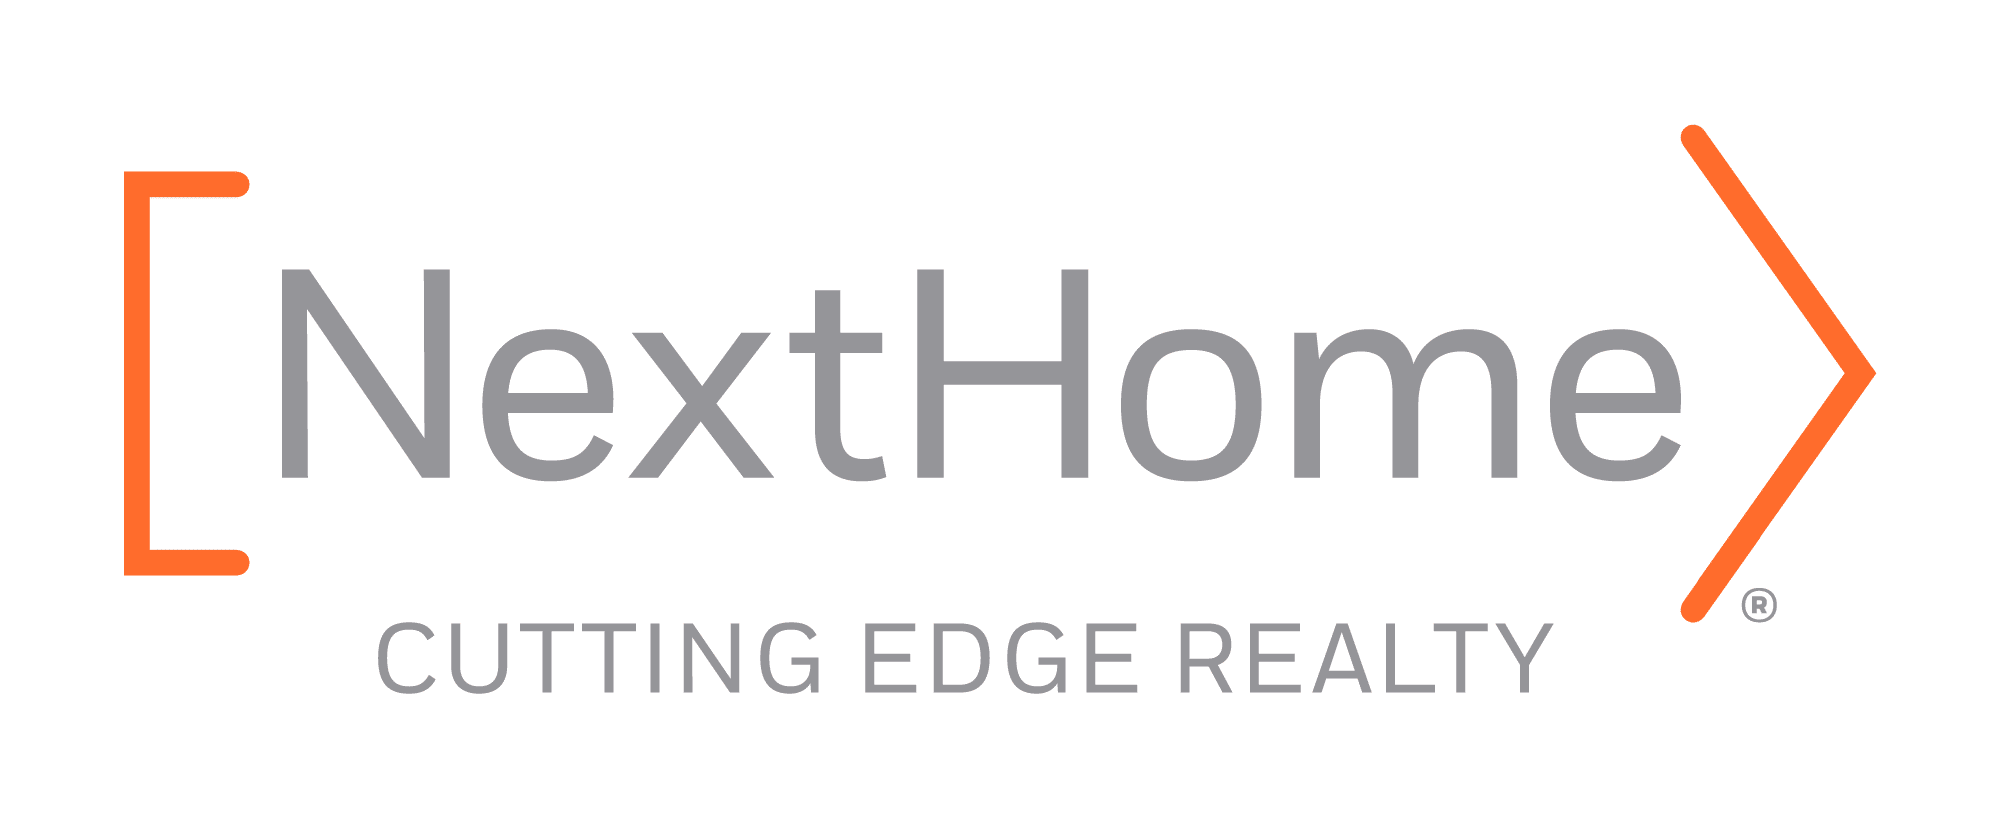 NextHome Cutting Edge Realty Parade of Homes sponsor logo